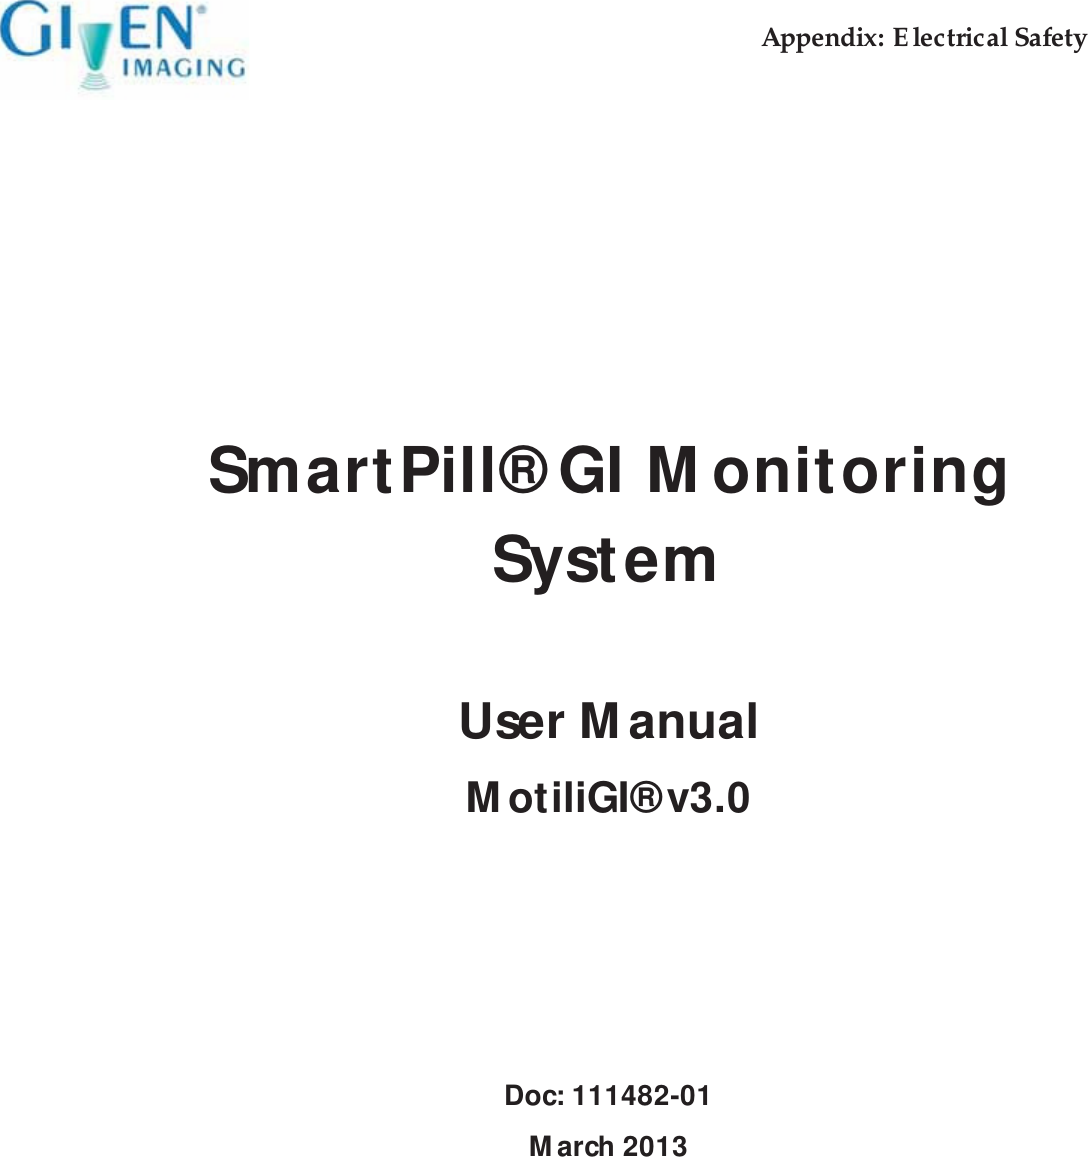 Appendix: Electrical Safety     SmartPill® GI Monitoring System   User Manual  MotiliGI® v3.0     Doc: 111482-01 March 2013       